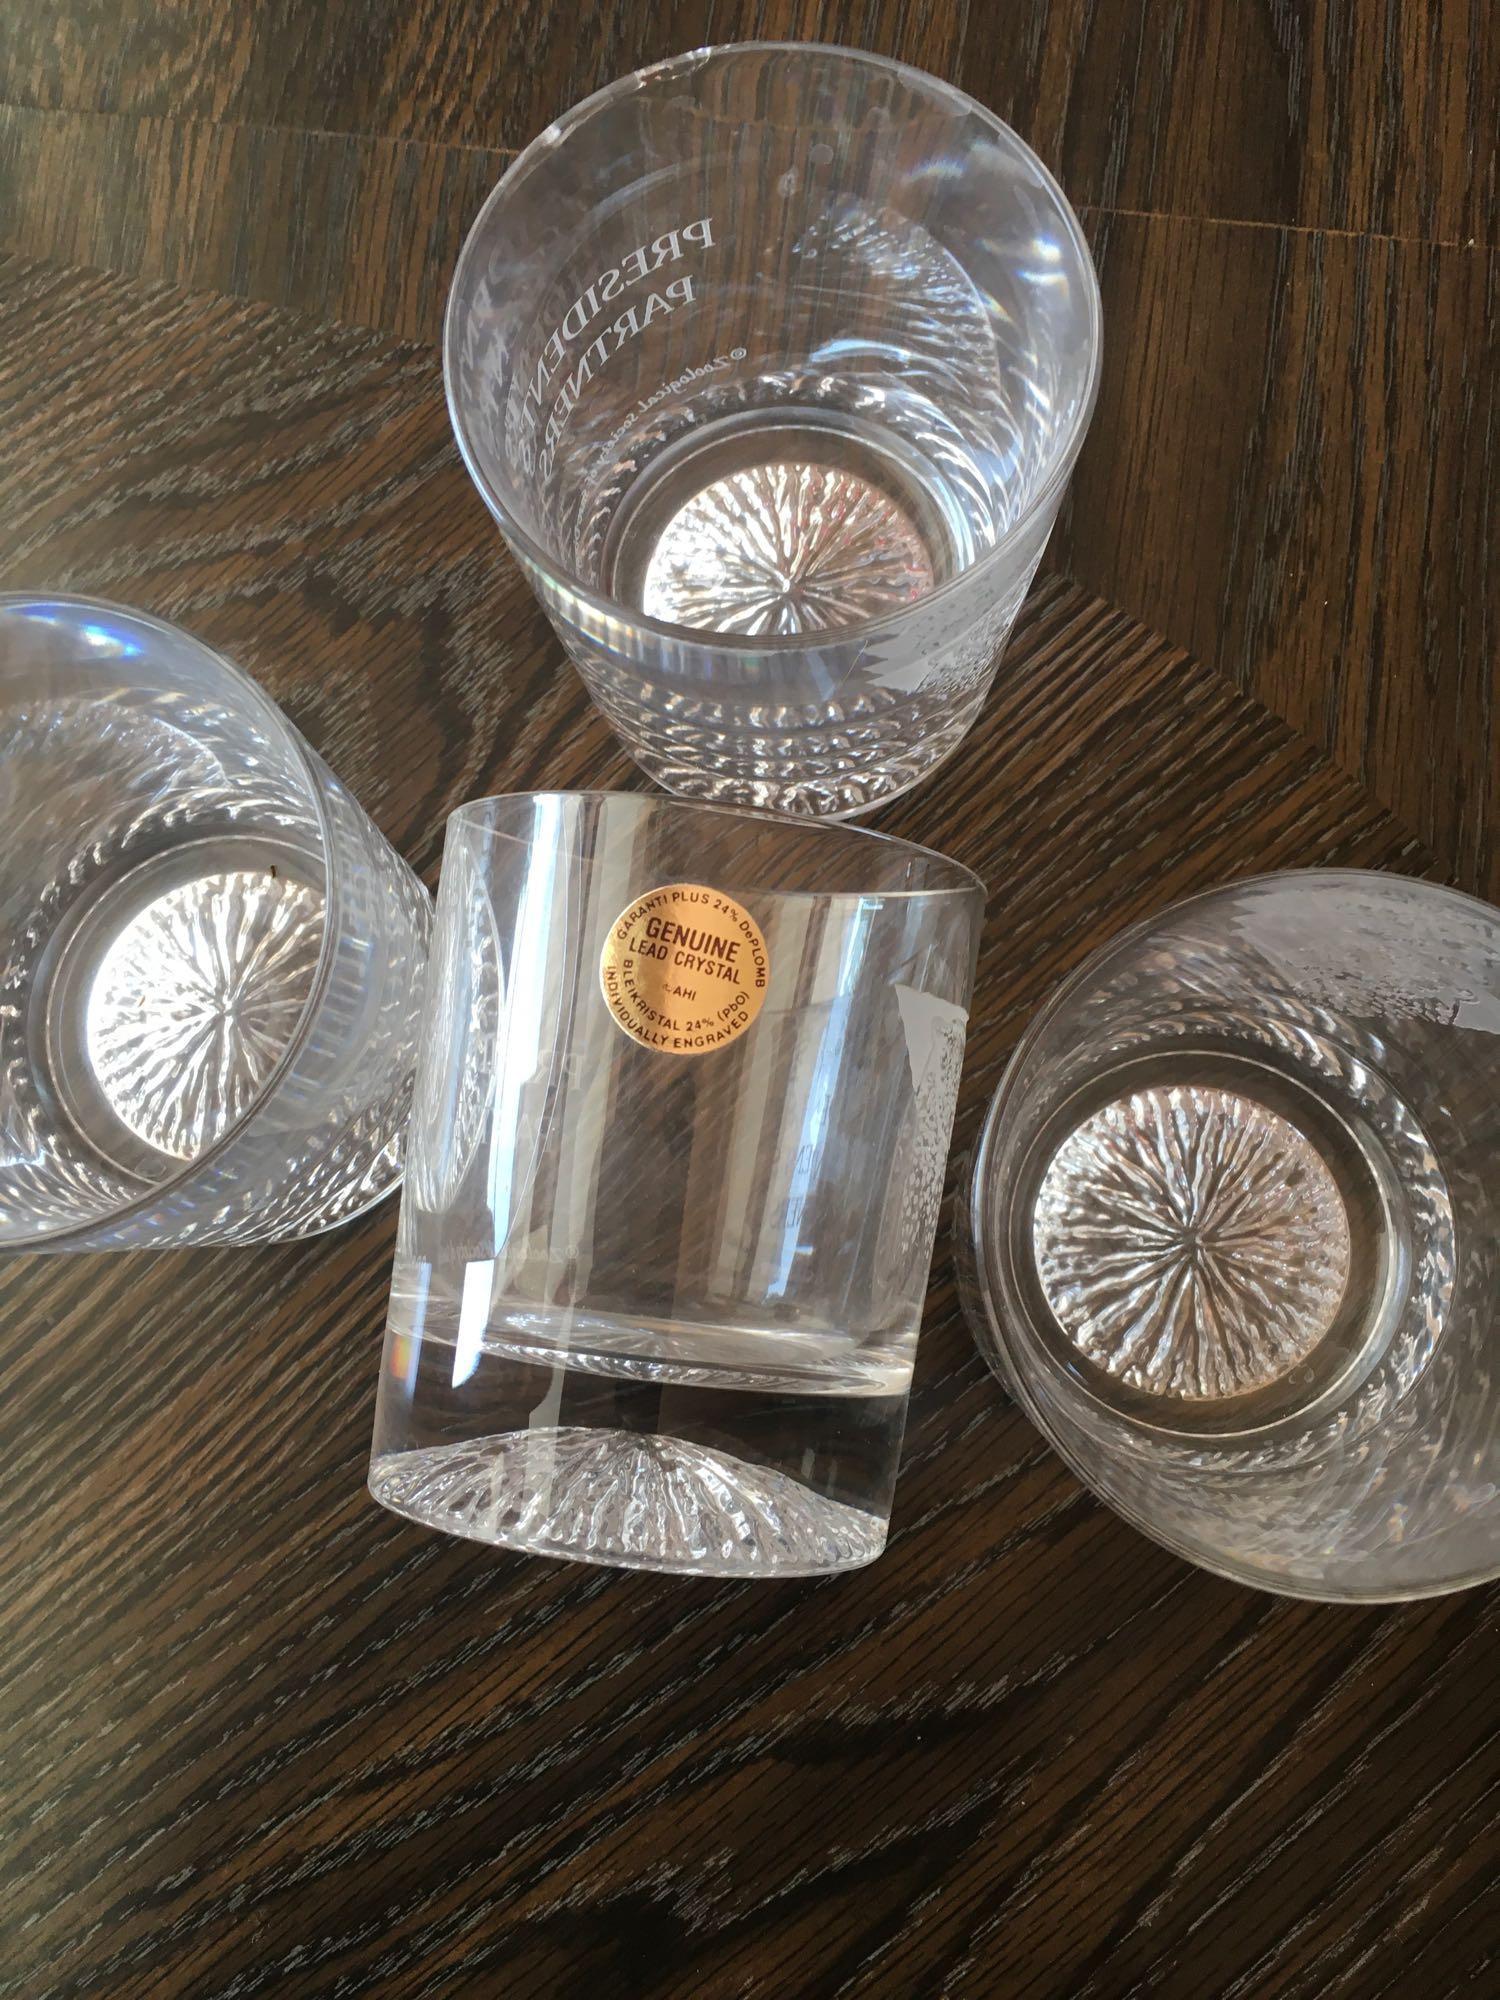 GA Global Amici made in Italy bowl, USA dishes, A Telefeora Gift tea pot, Genuine Lead crystal